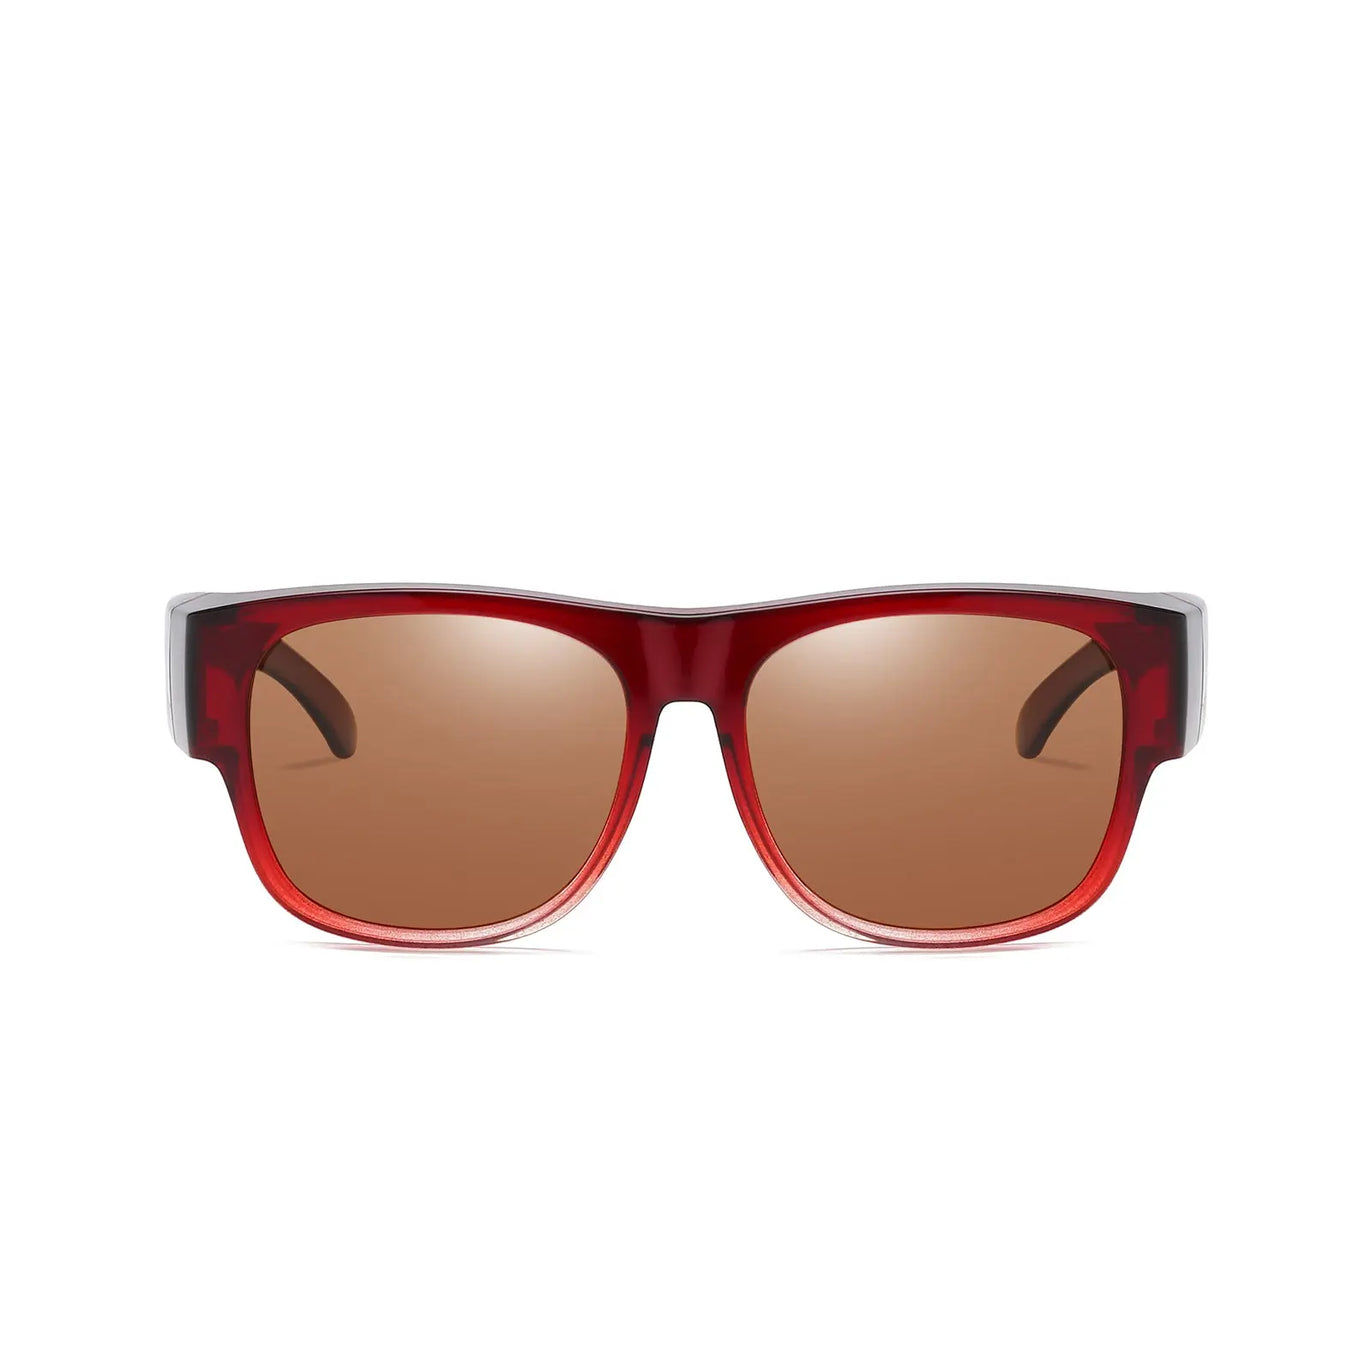 Duco unisex Wear Over Prescription Glasses RX Glasses Polarized Sunglasses DC8956 Plus Wine Red Frame Brown Lens